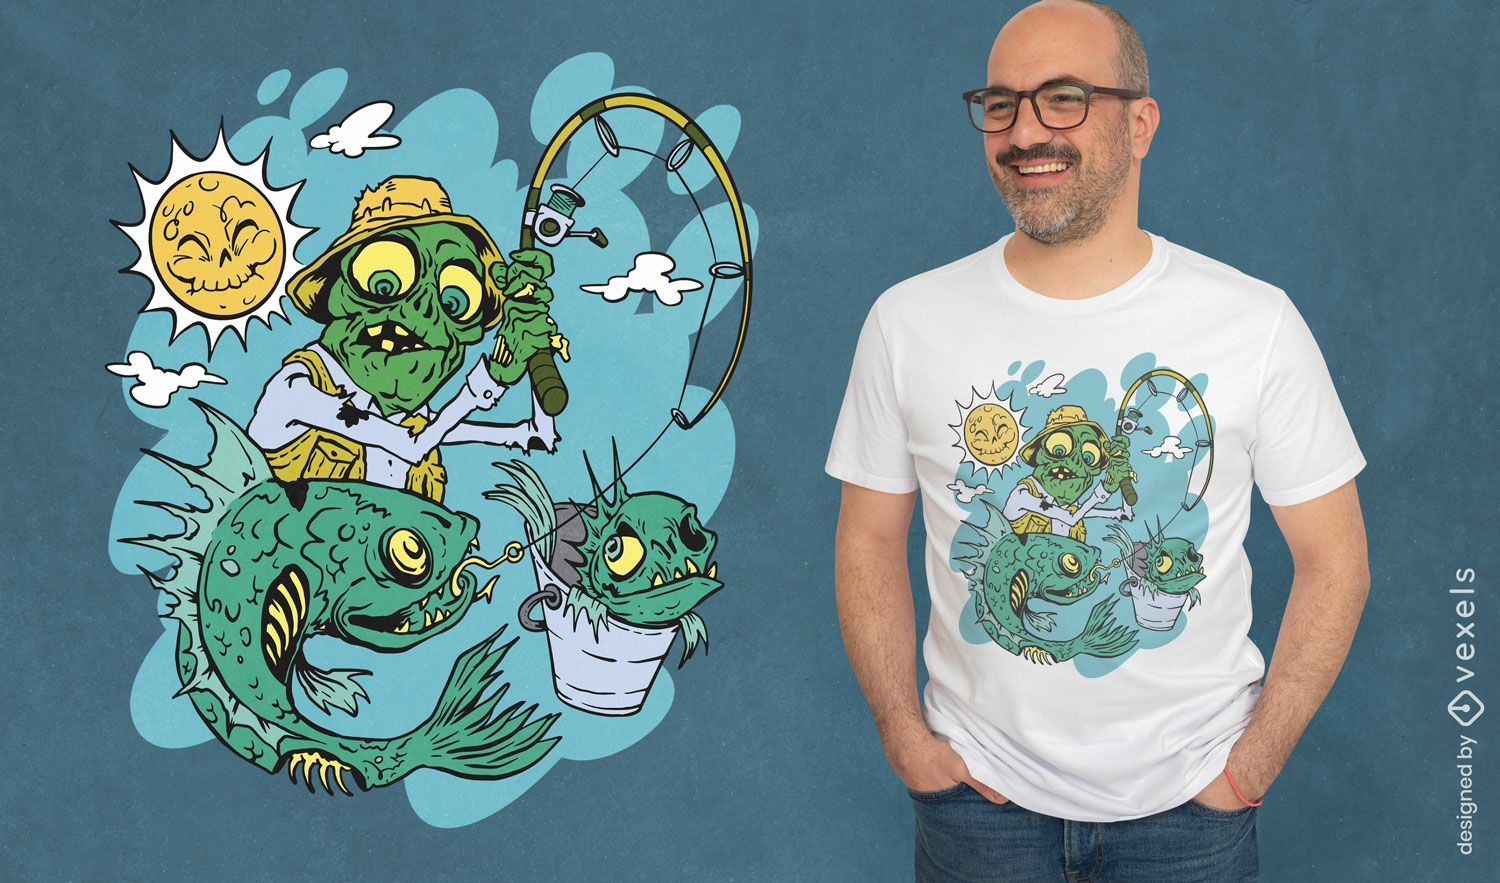 Zombie fishing t-shirt design